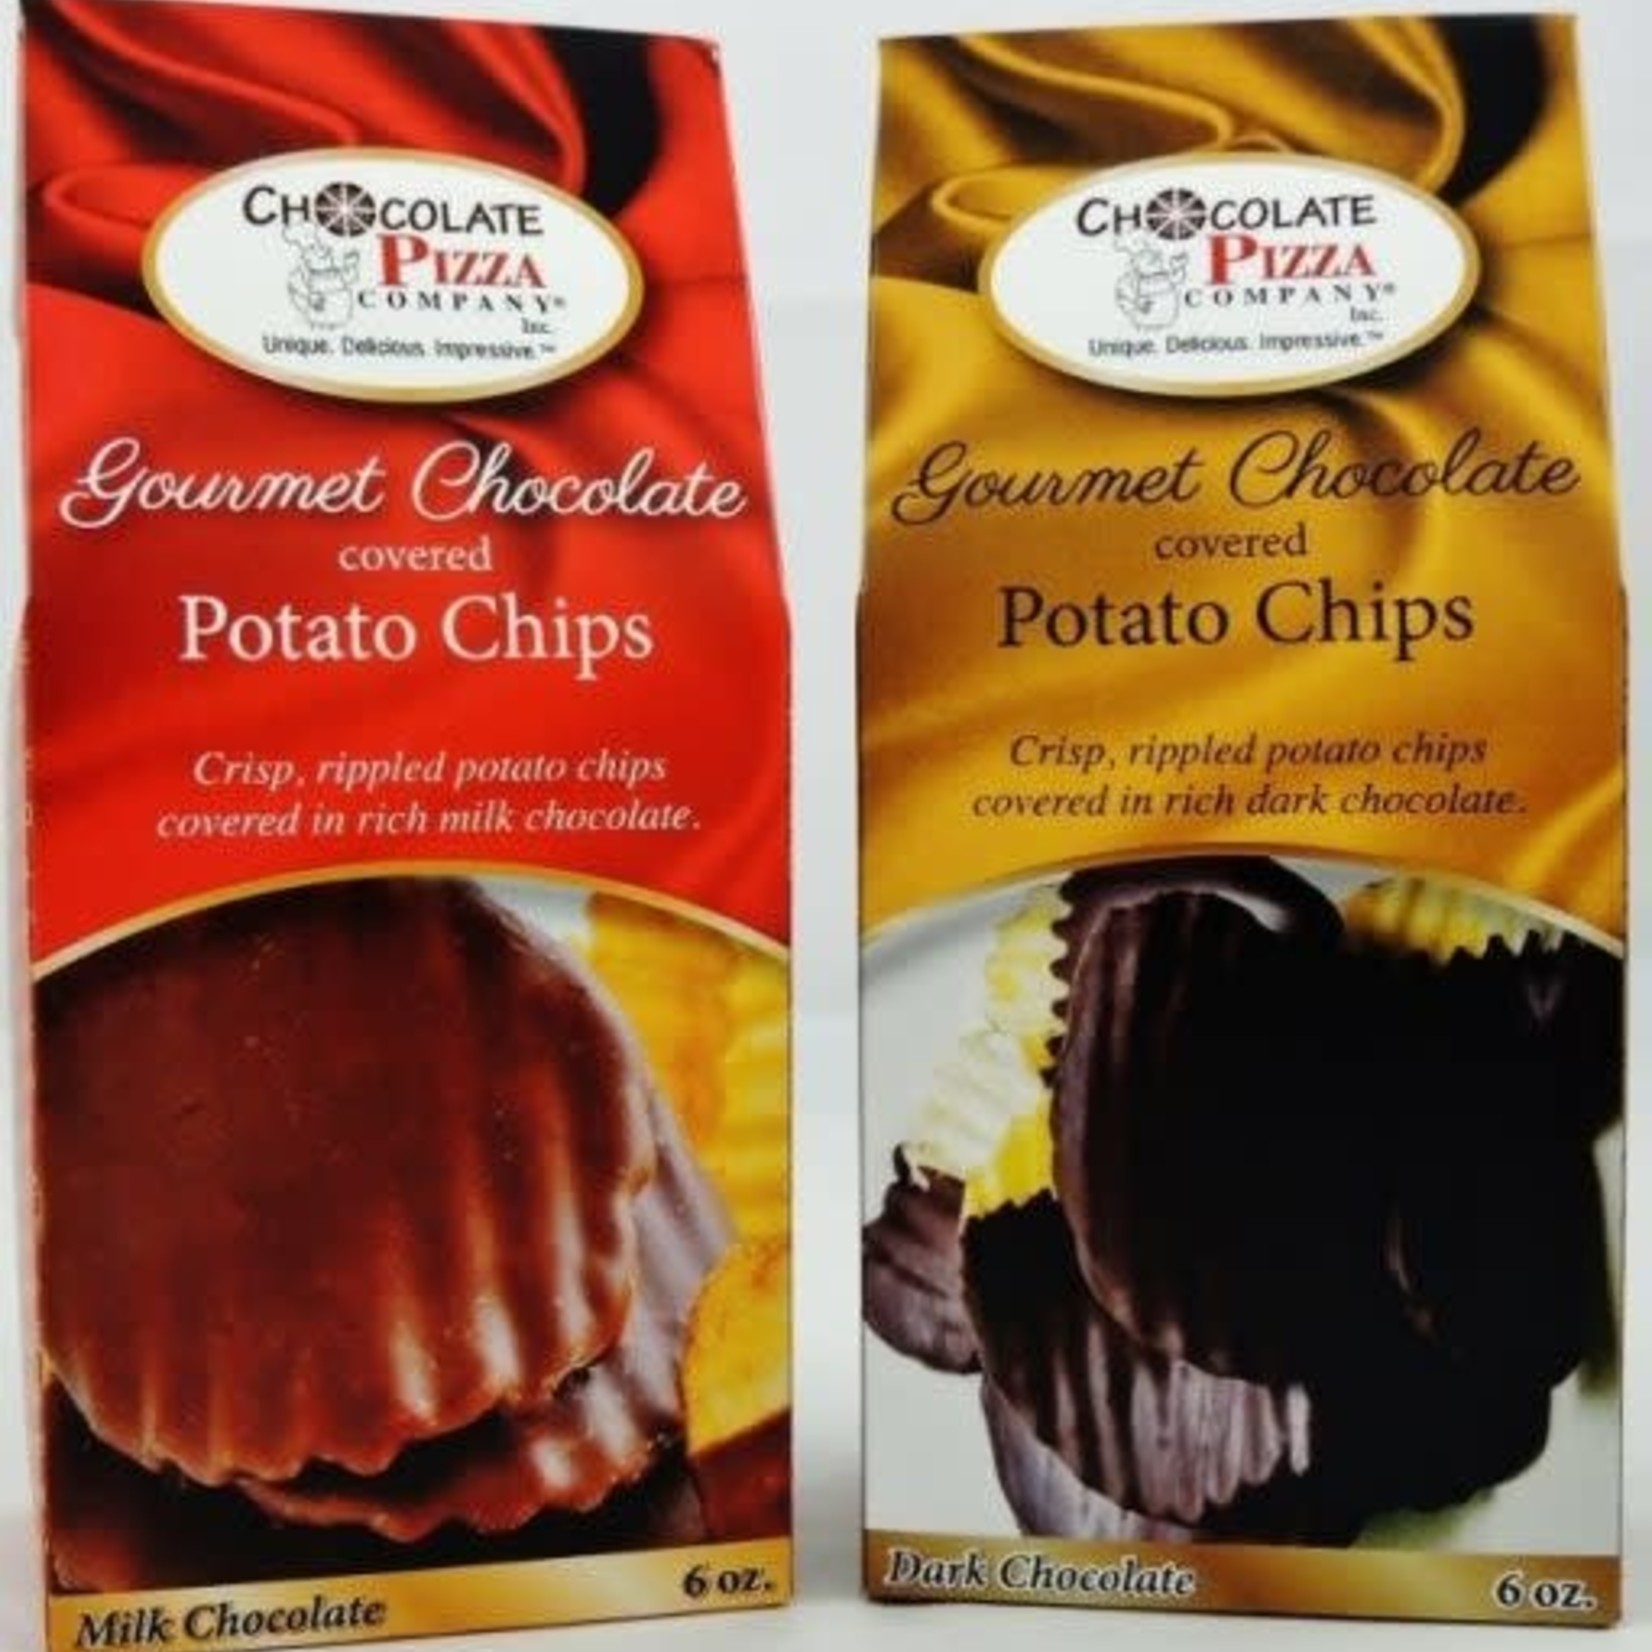 Chocolate Pizza Company Chocolate Covered Potato Chips 6oz. - Milk